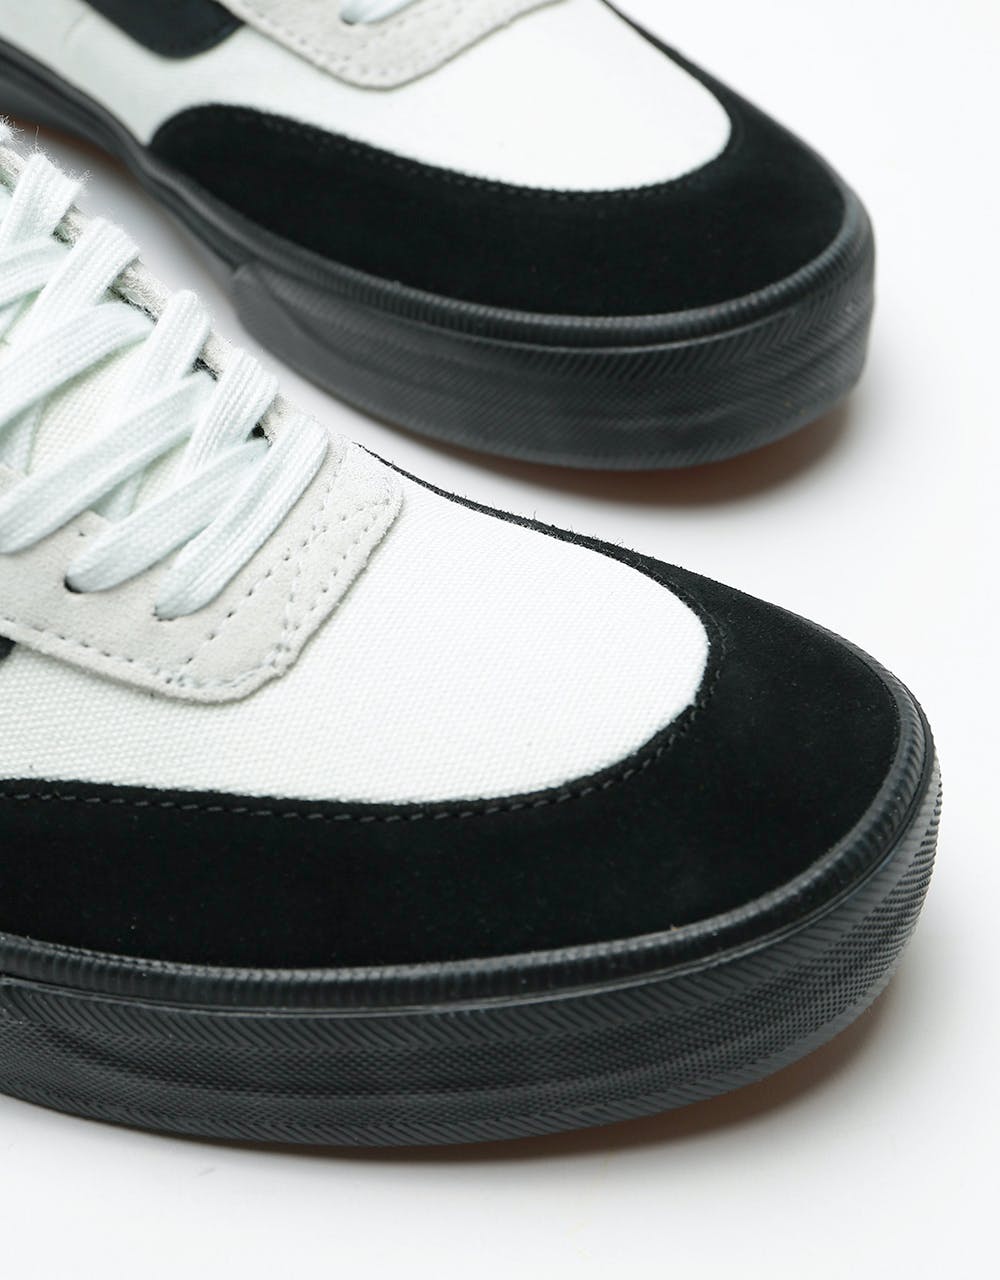 Vans Gilbert Crockett 2 Pro Skate Shoes - Pearl/Black